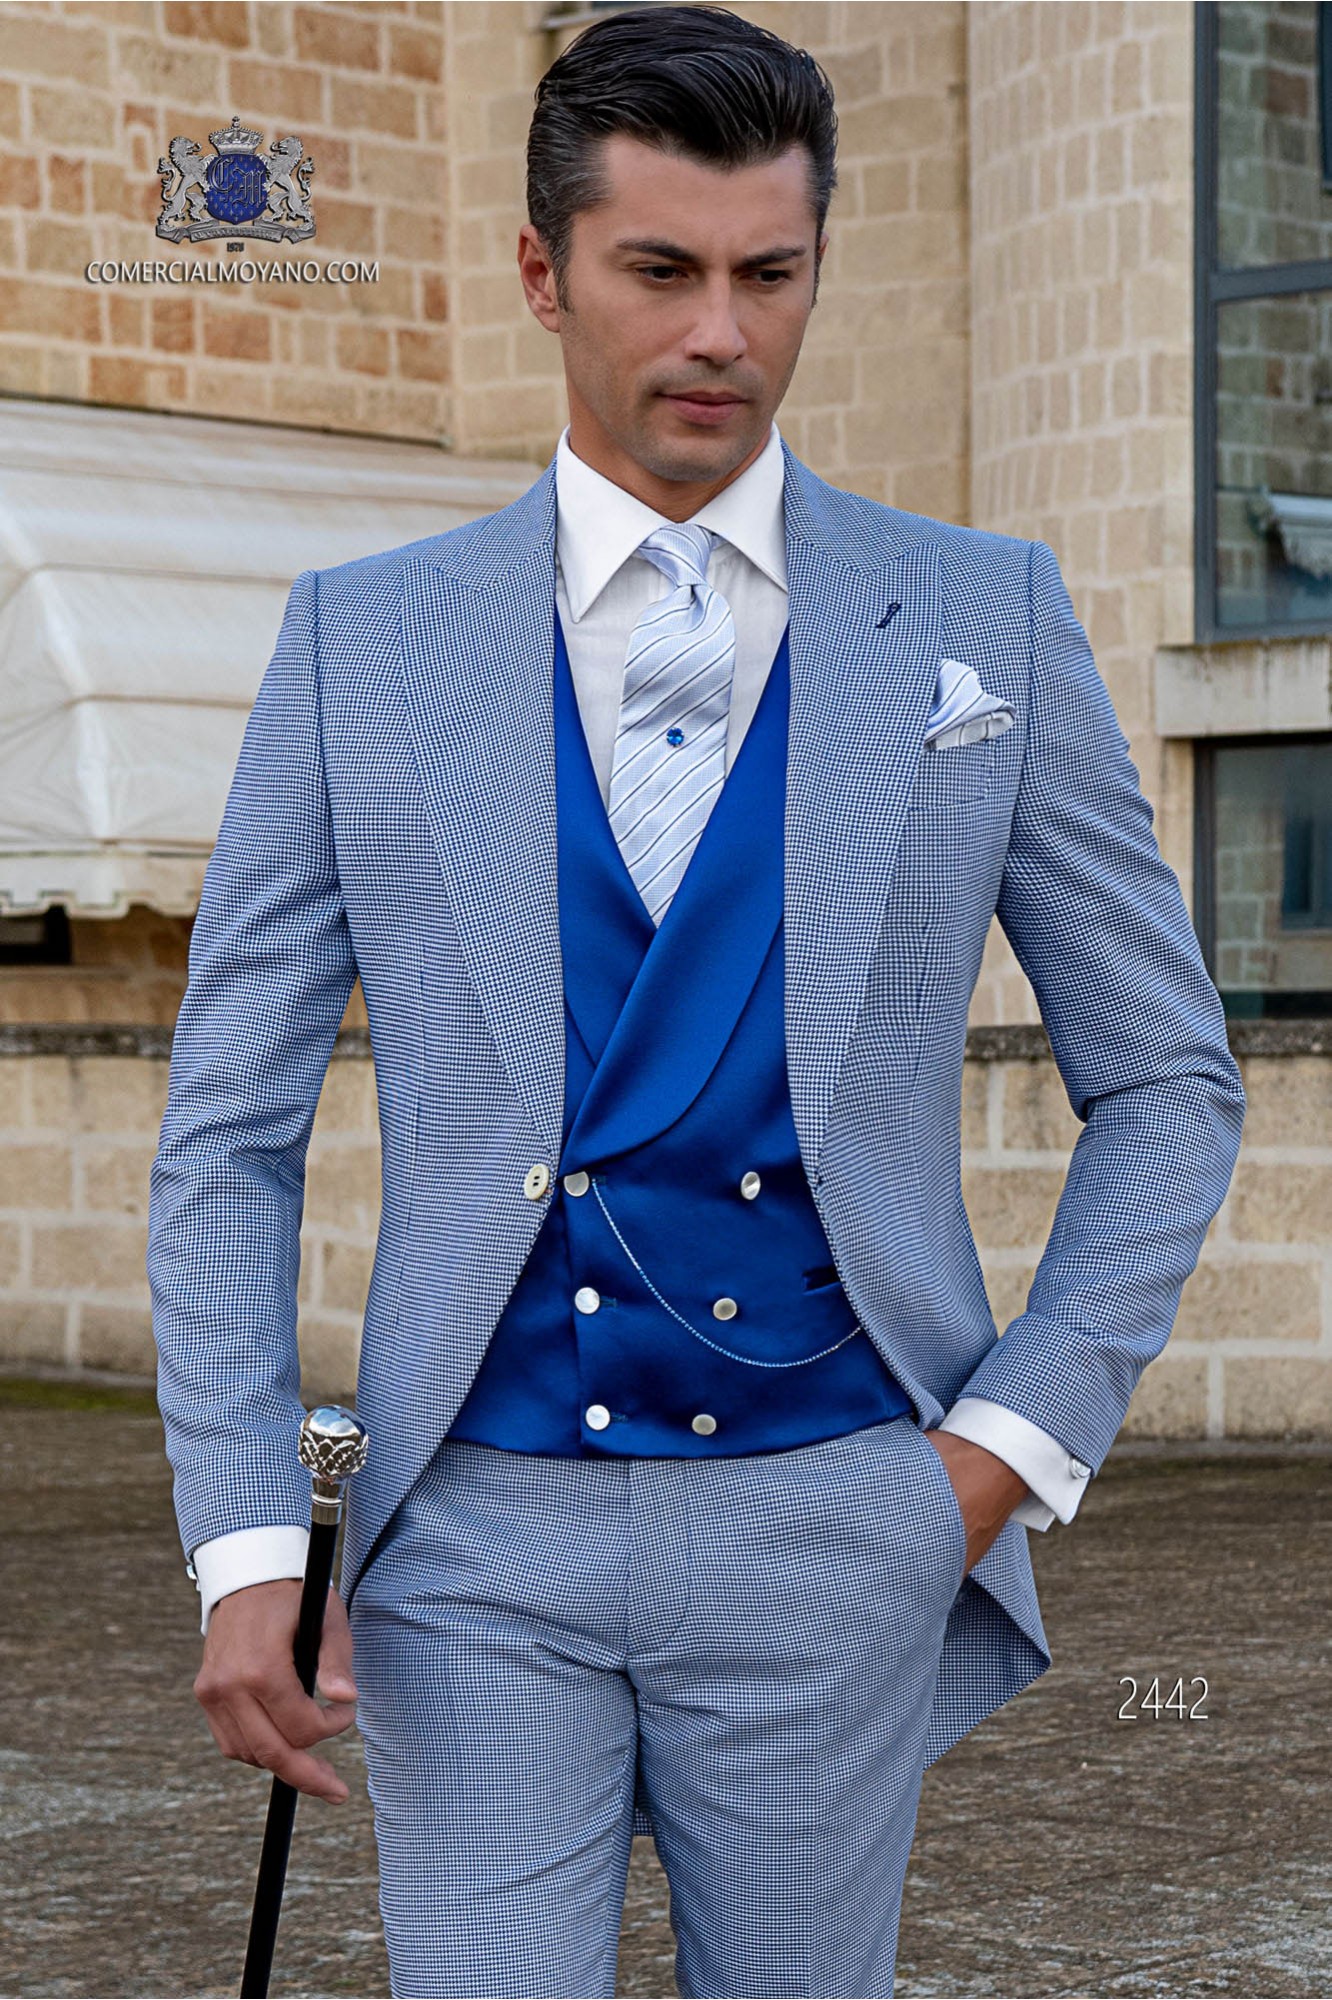 Bespoke Houndstooth morning suit royal blue model 2442 Mario Moyano